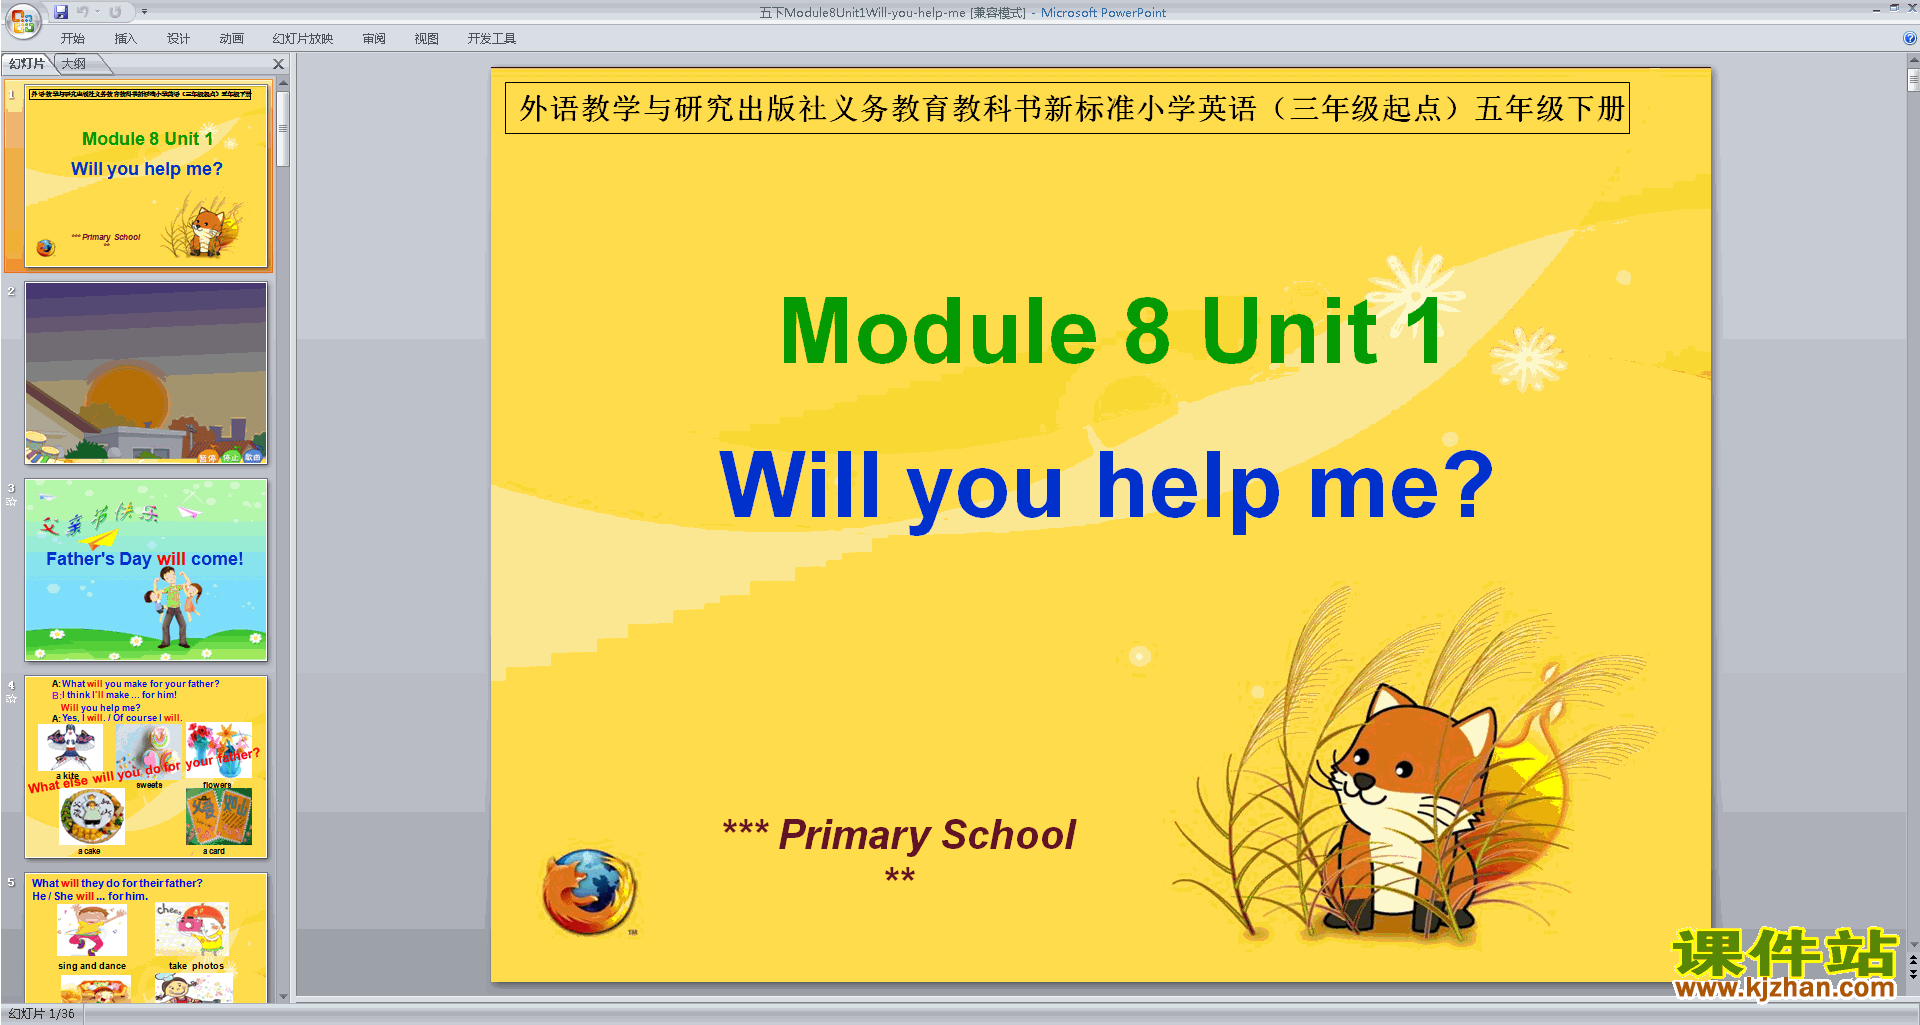 апModule8 Unit1 Will you help mepptμ